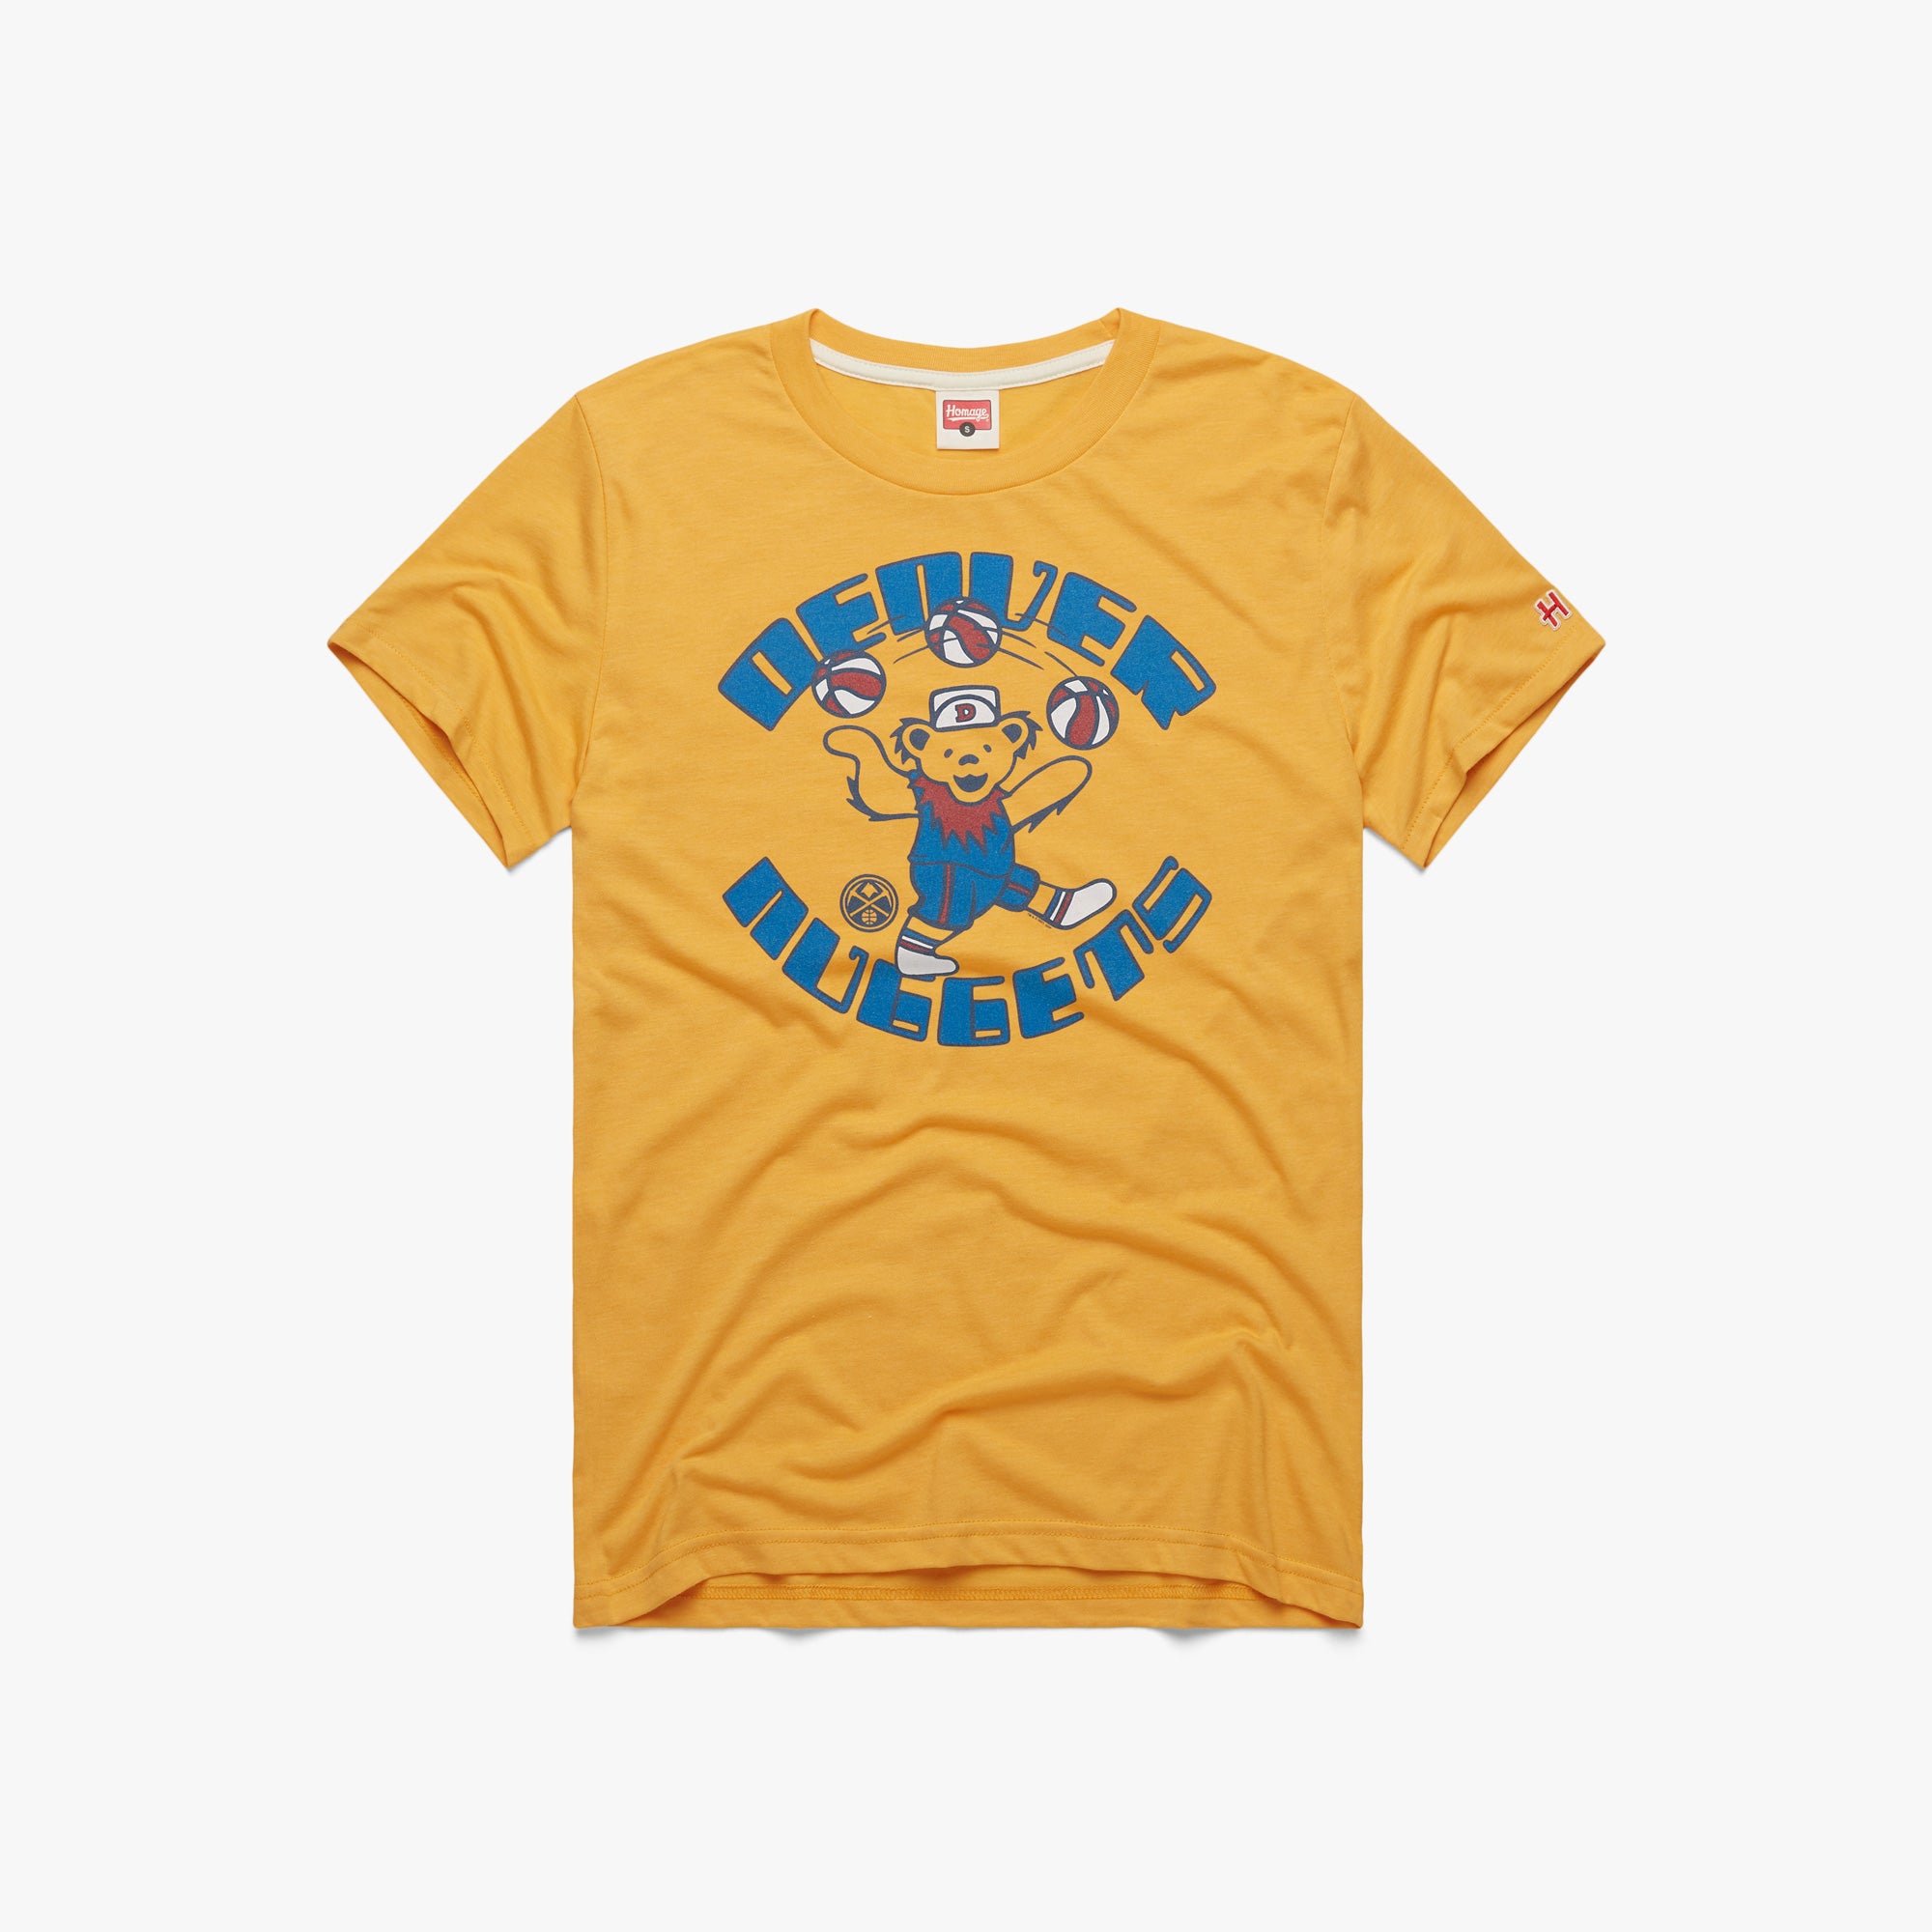 2023 NBA Finals Denver Nuggets Vs Miami Heat shirt - Freedomdesign